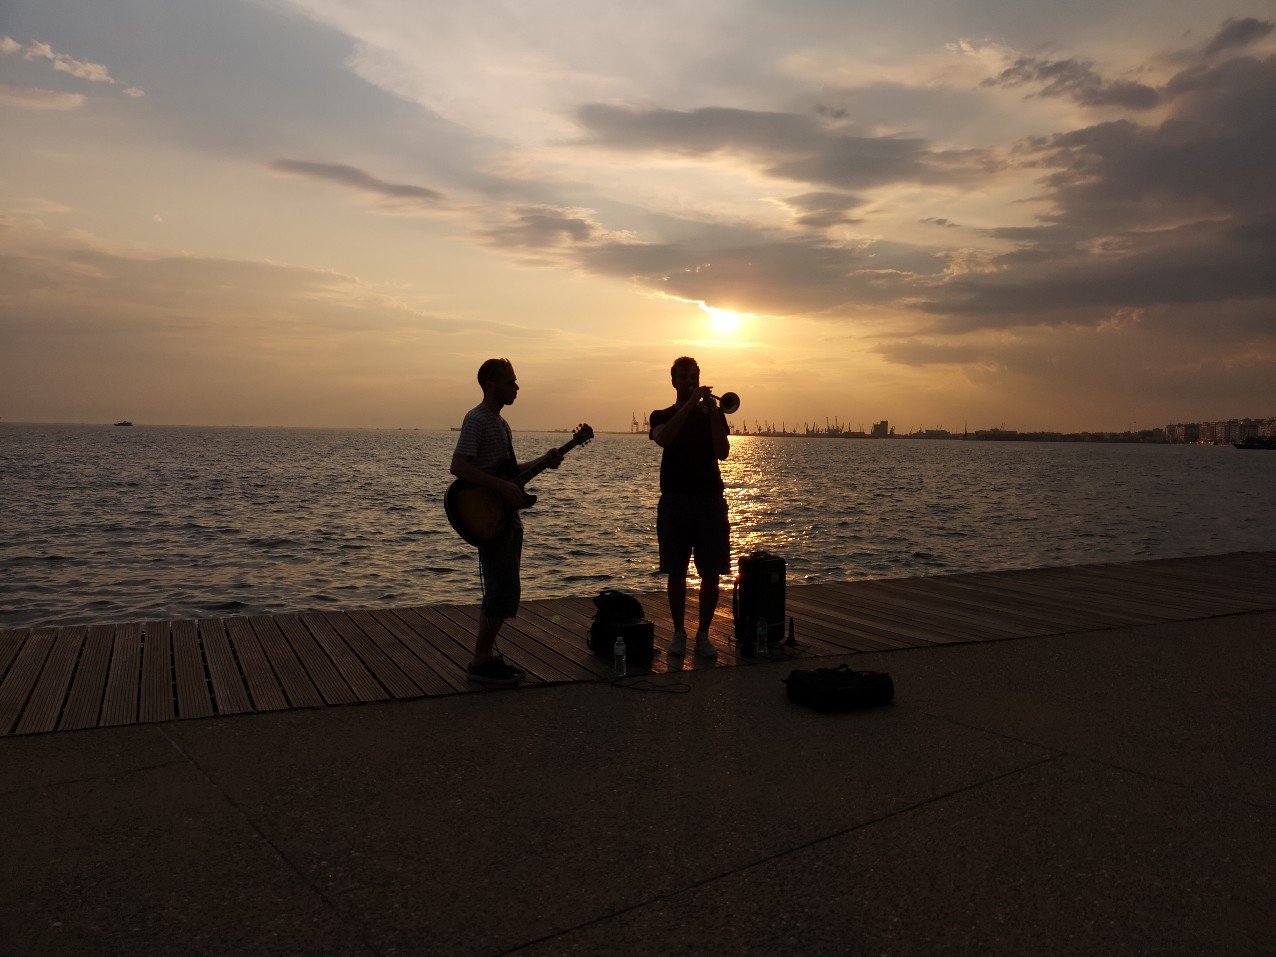 Musicians against setting sun 